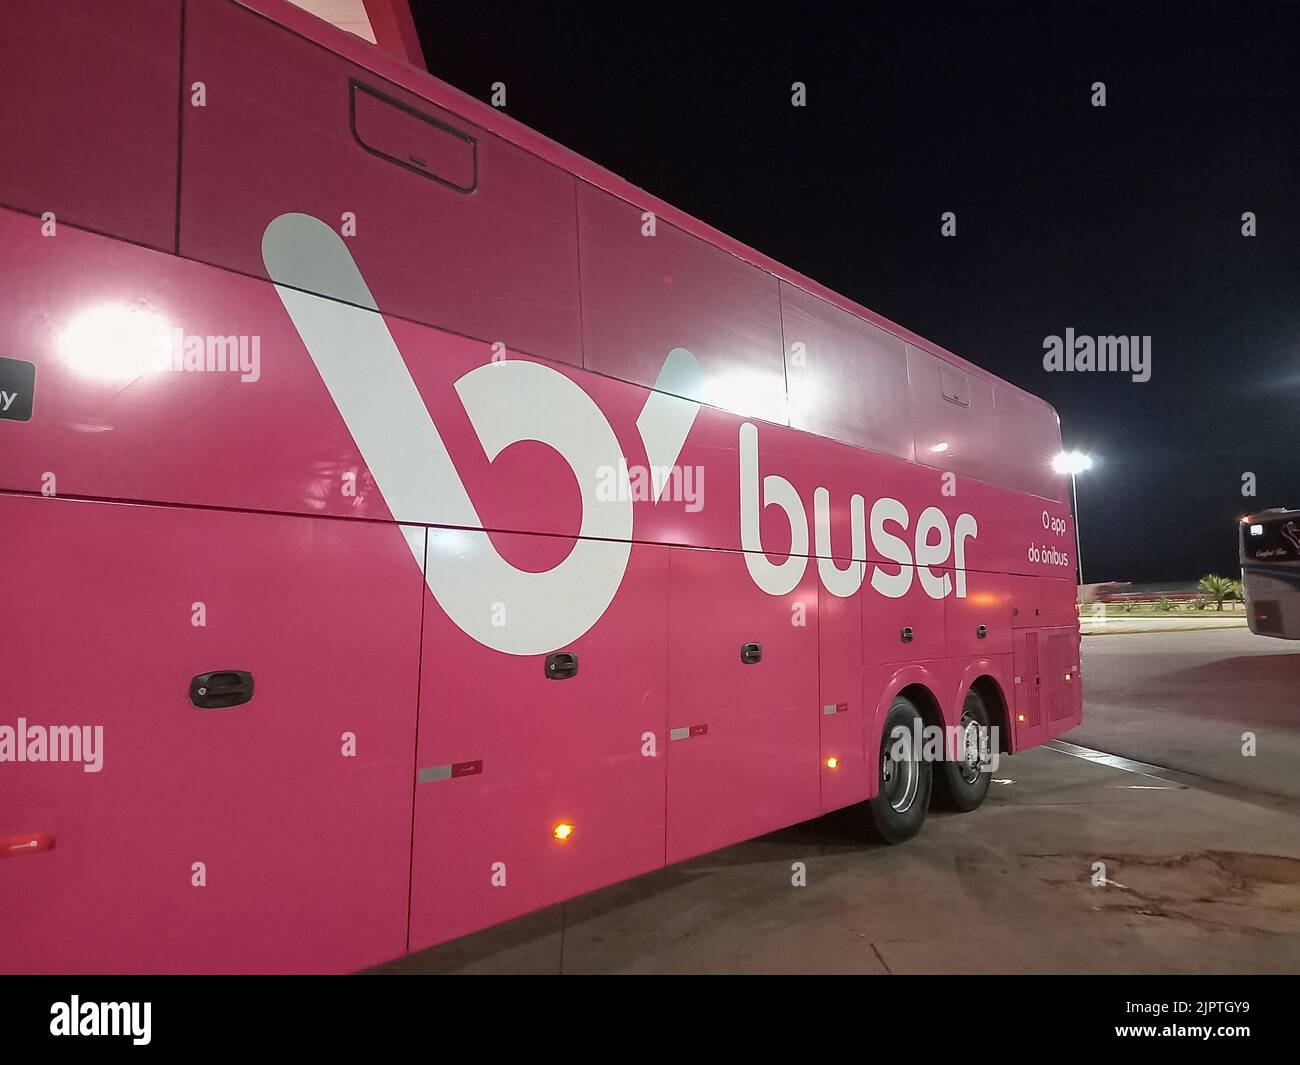 Sao Sebastiao da Bela Vista, Minas Gerais, Brazil - August 15, 2022: detail of a Buser app bus at a stopping point at night Stock Photo